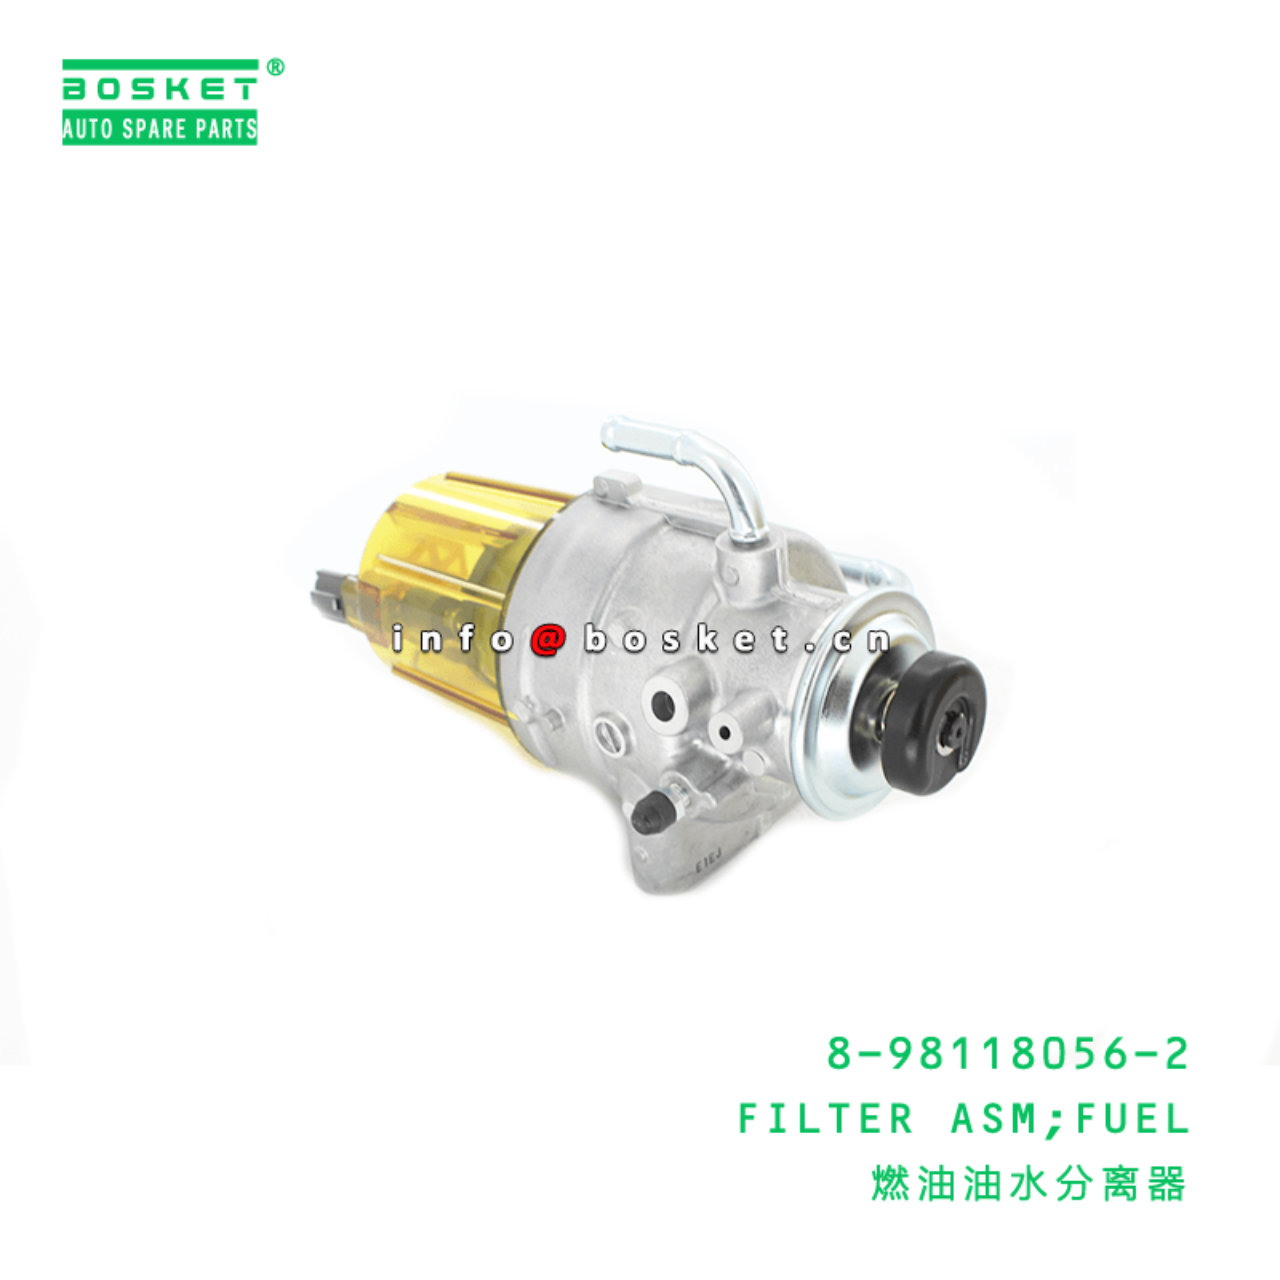 8-98118056-2 Fuel Filter Assembly Suitable for ISUZU FSR 8981180562